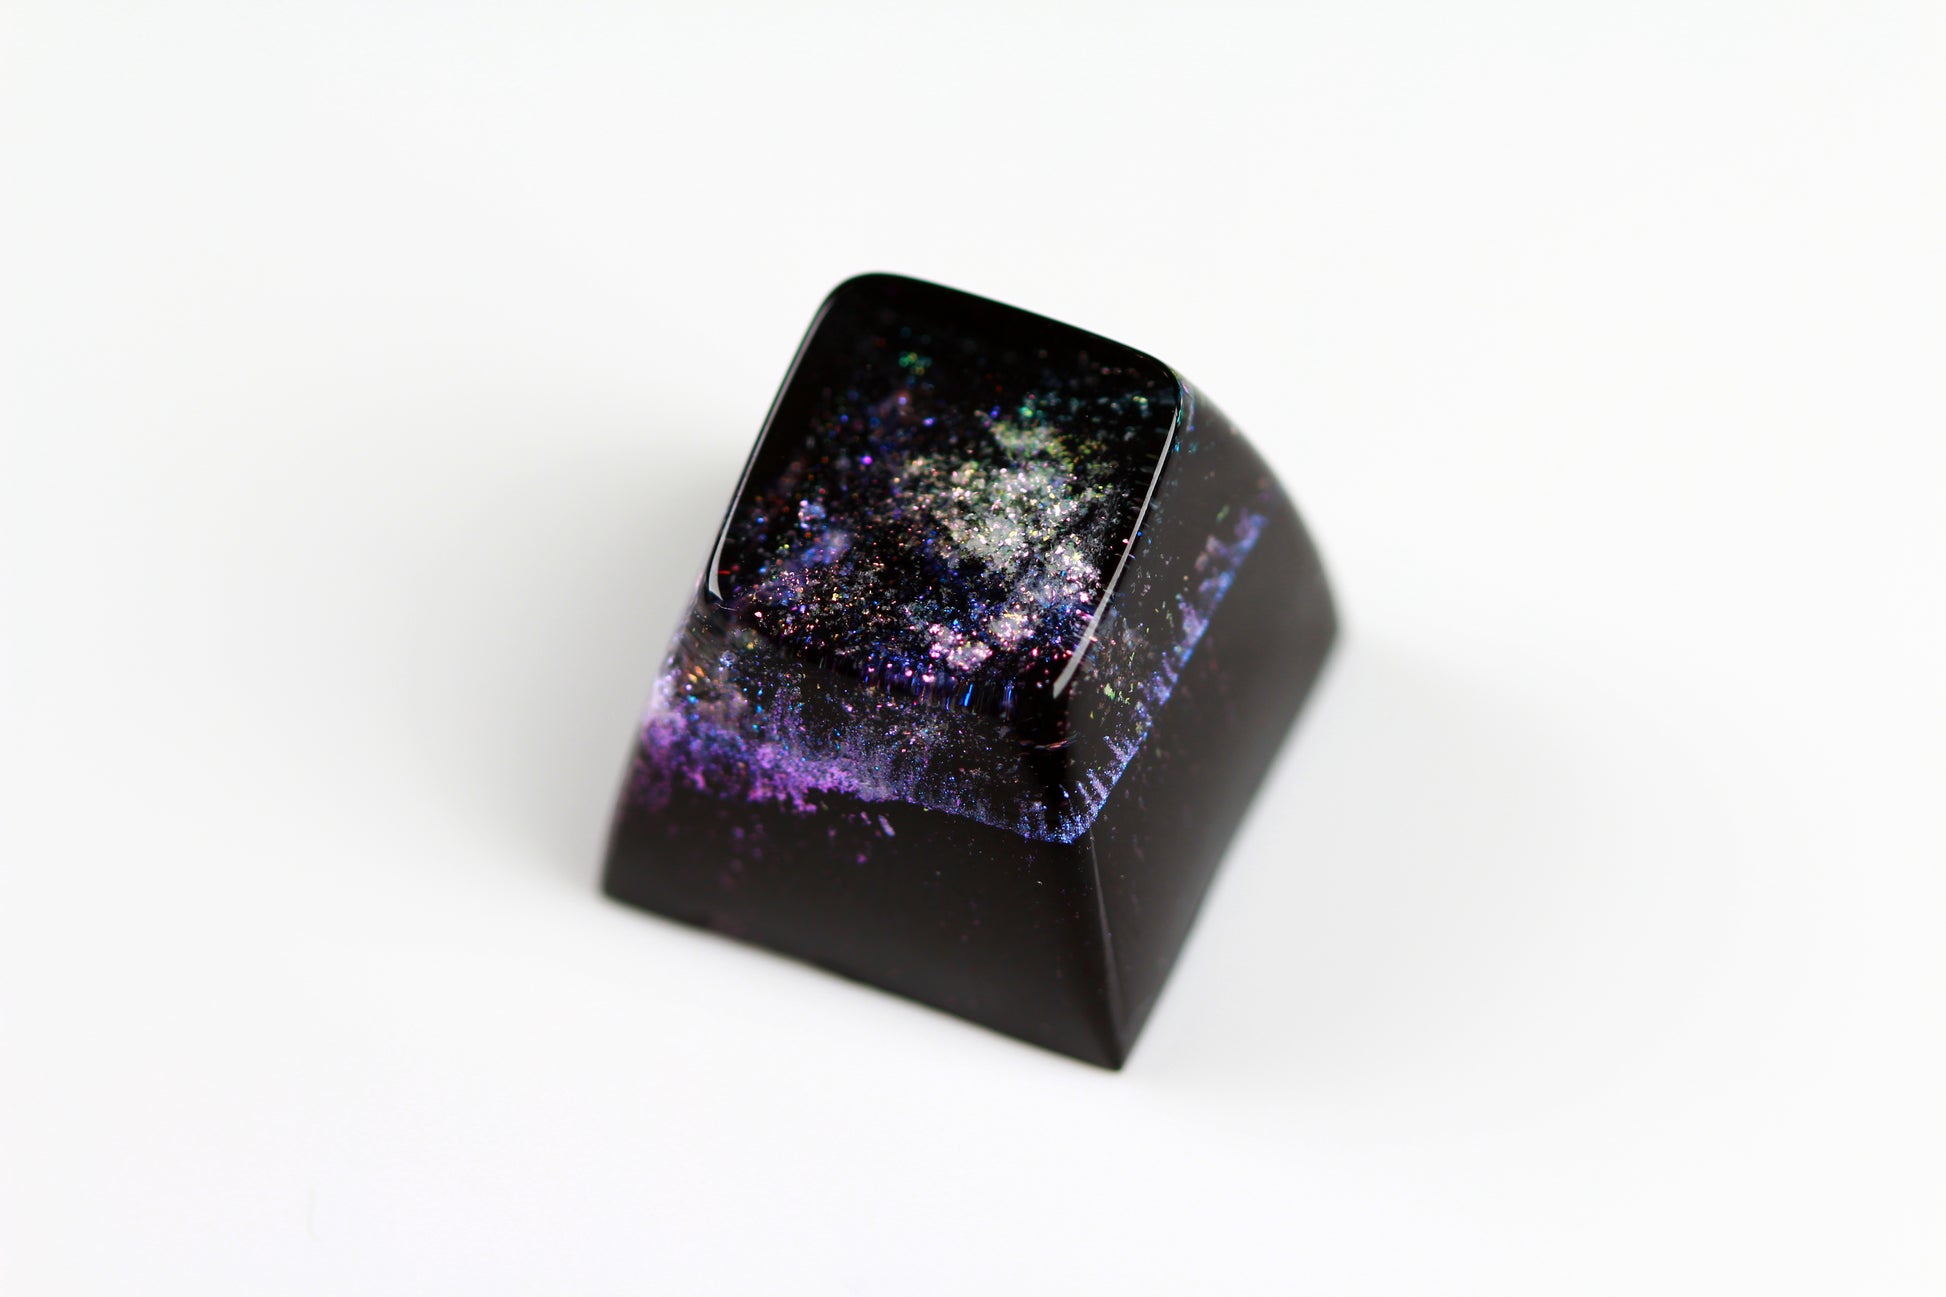 Gimpy SA Row 1 - Deep Field Opal Nebula 1 - PrimeCaps Keycap - Blank and Sculpted Artisan Keycaps for cherry MX mechanical keyboards 